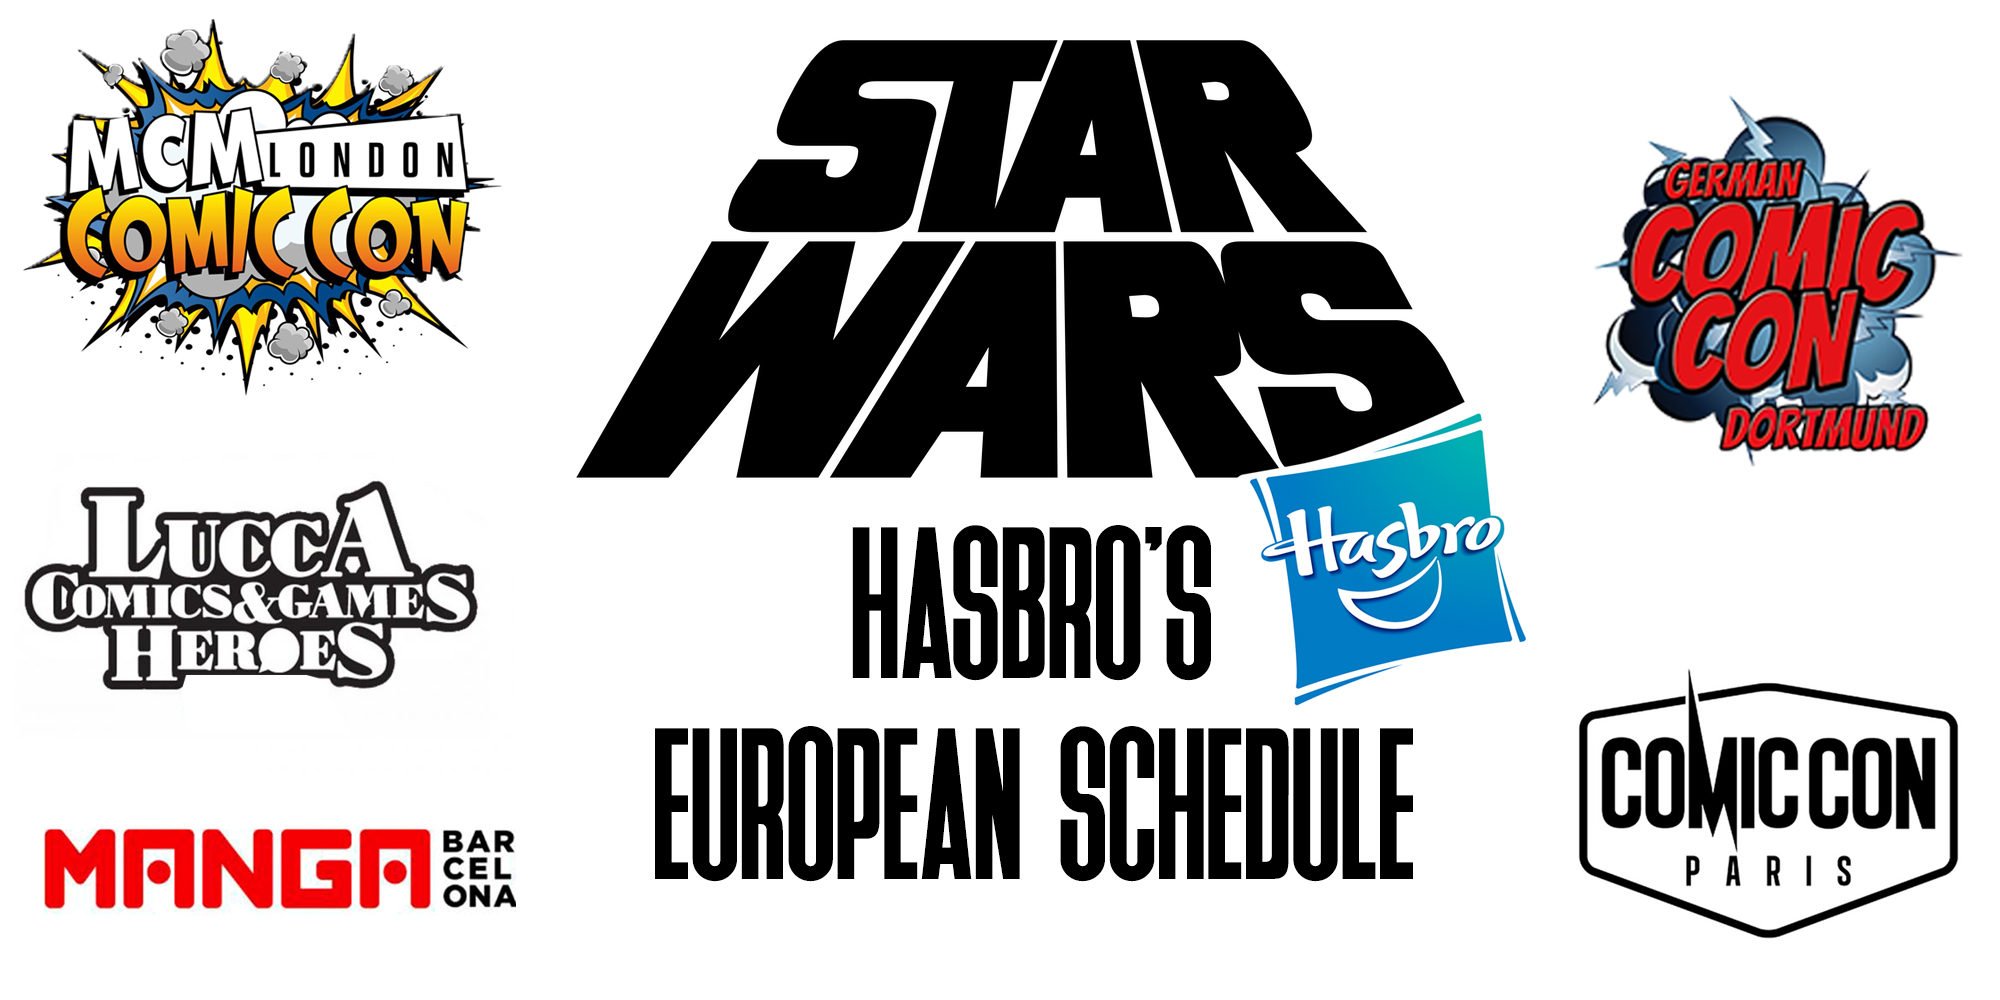 Hasbro Convention Schedule 2019